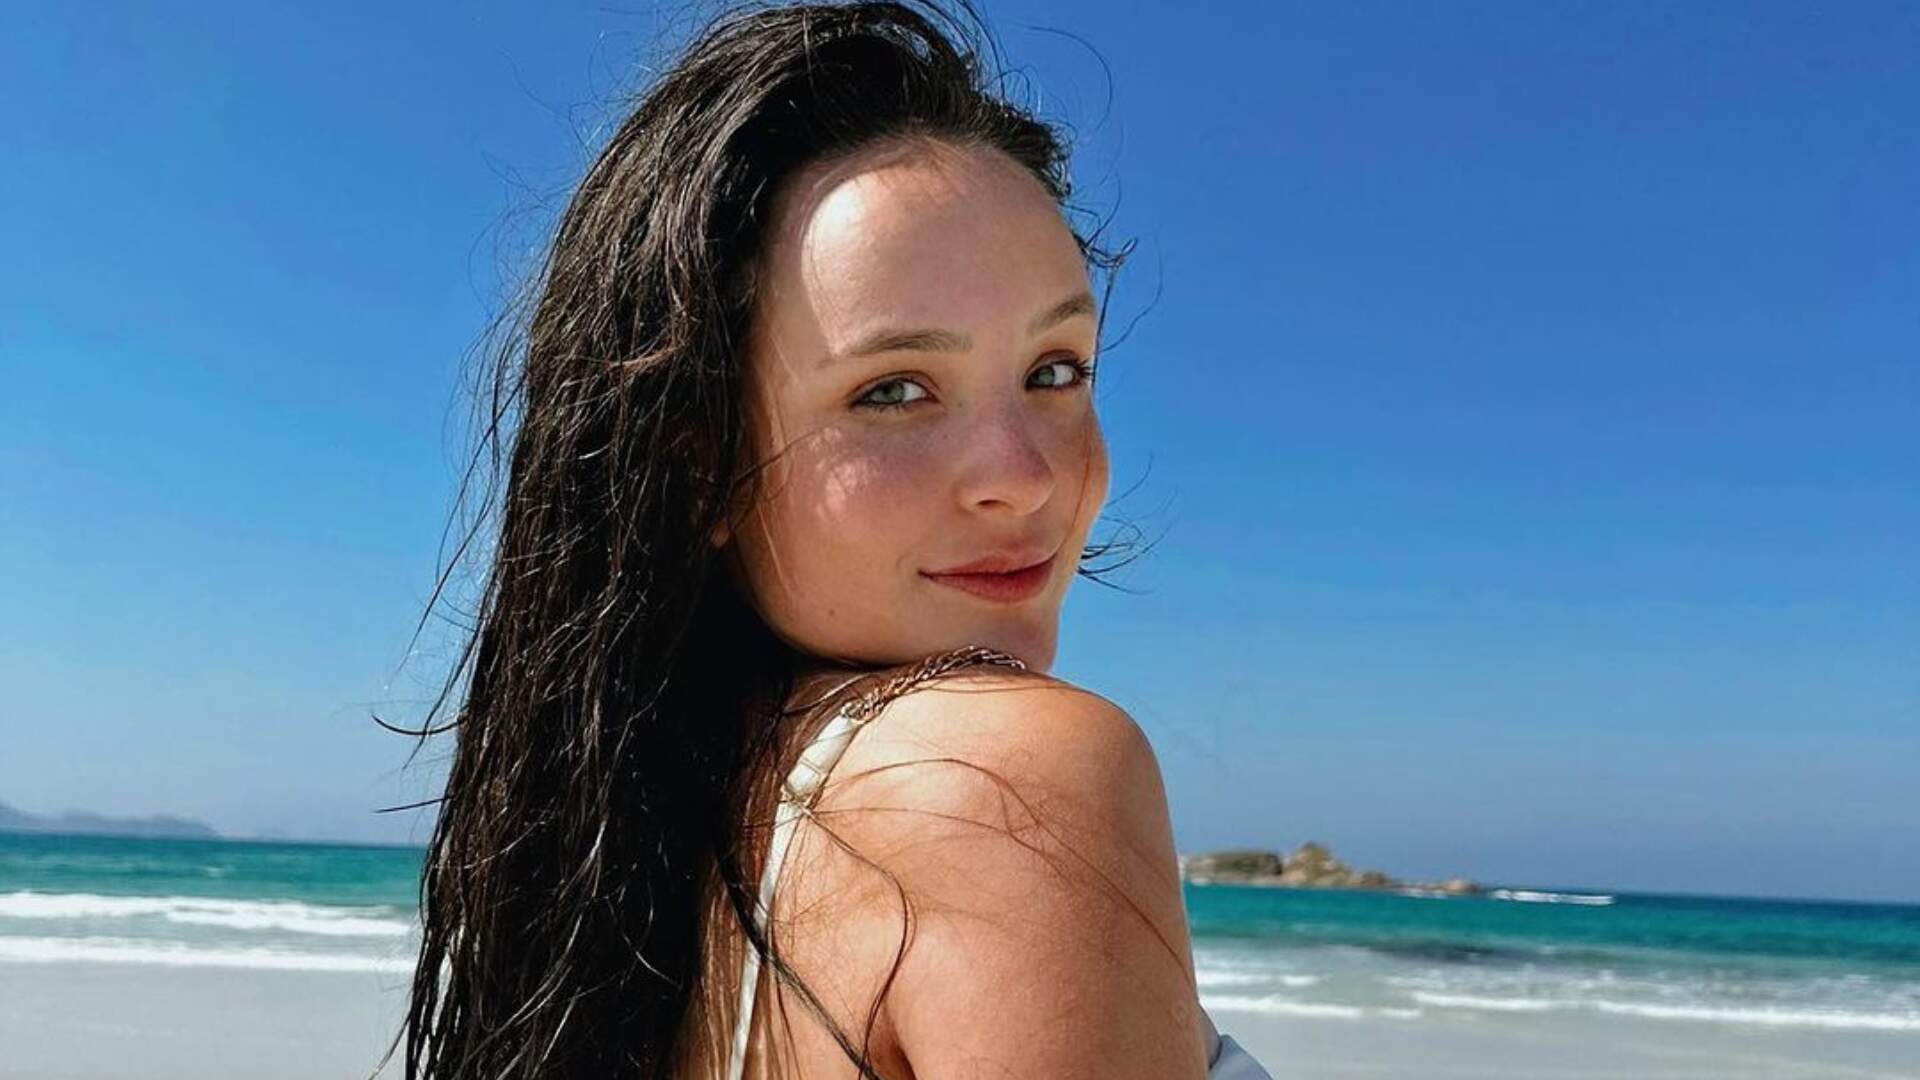 Na praia, Larissa Manoela esbanja beleza natural de biquíni branco provocante enquanto exibe corpão - Metropolitana FM